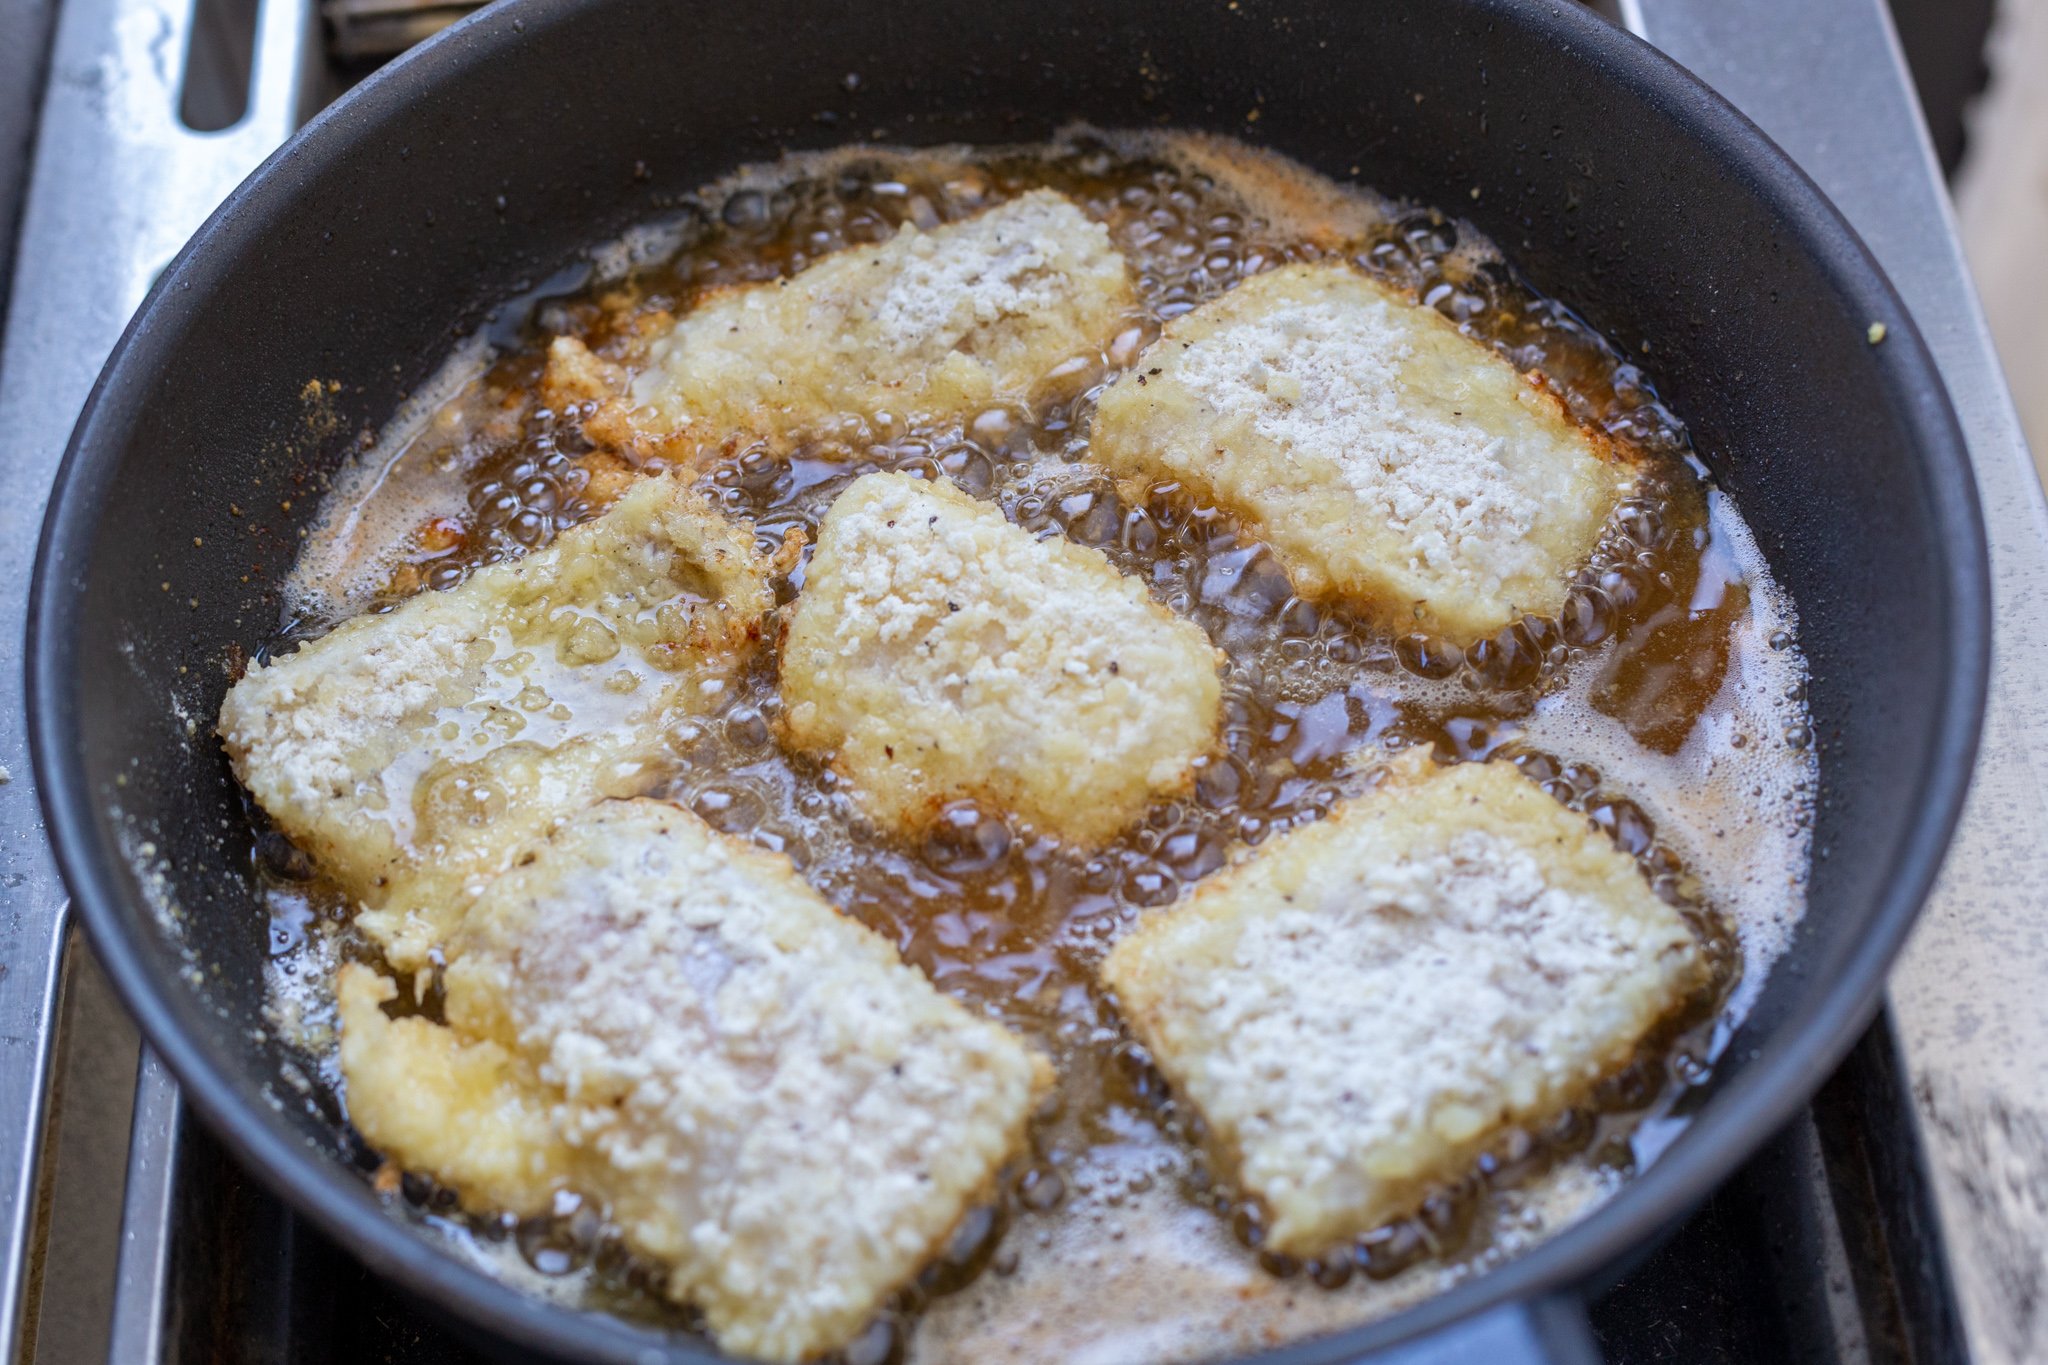 The Easiest Crispy Pan-Seared Fish Recipe